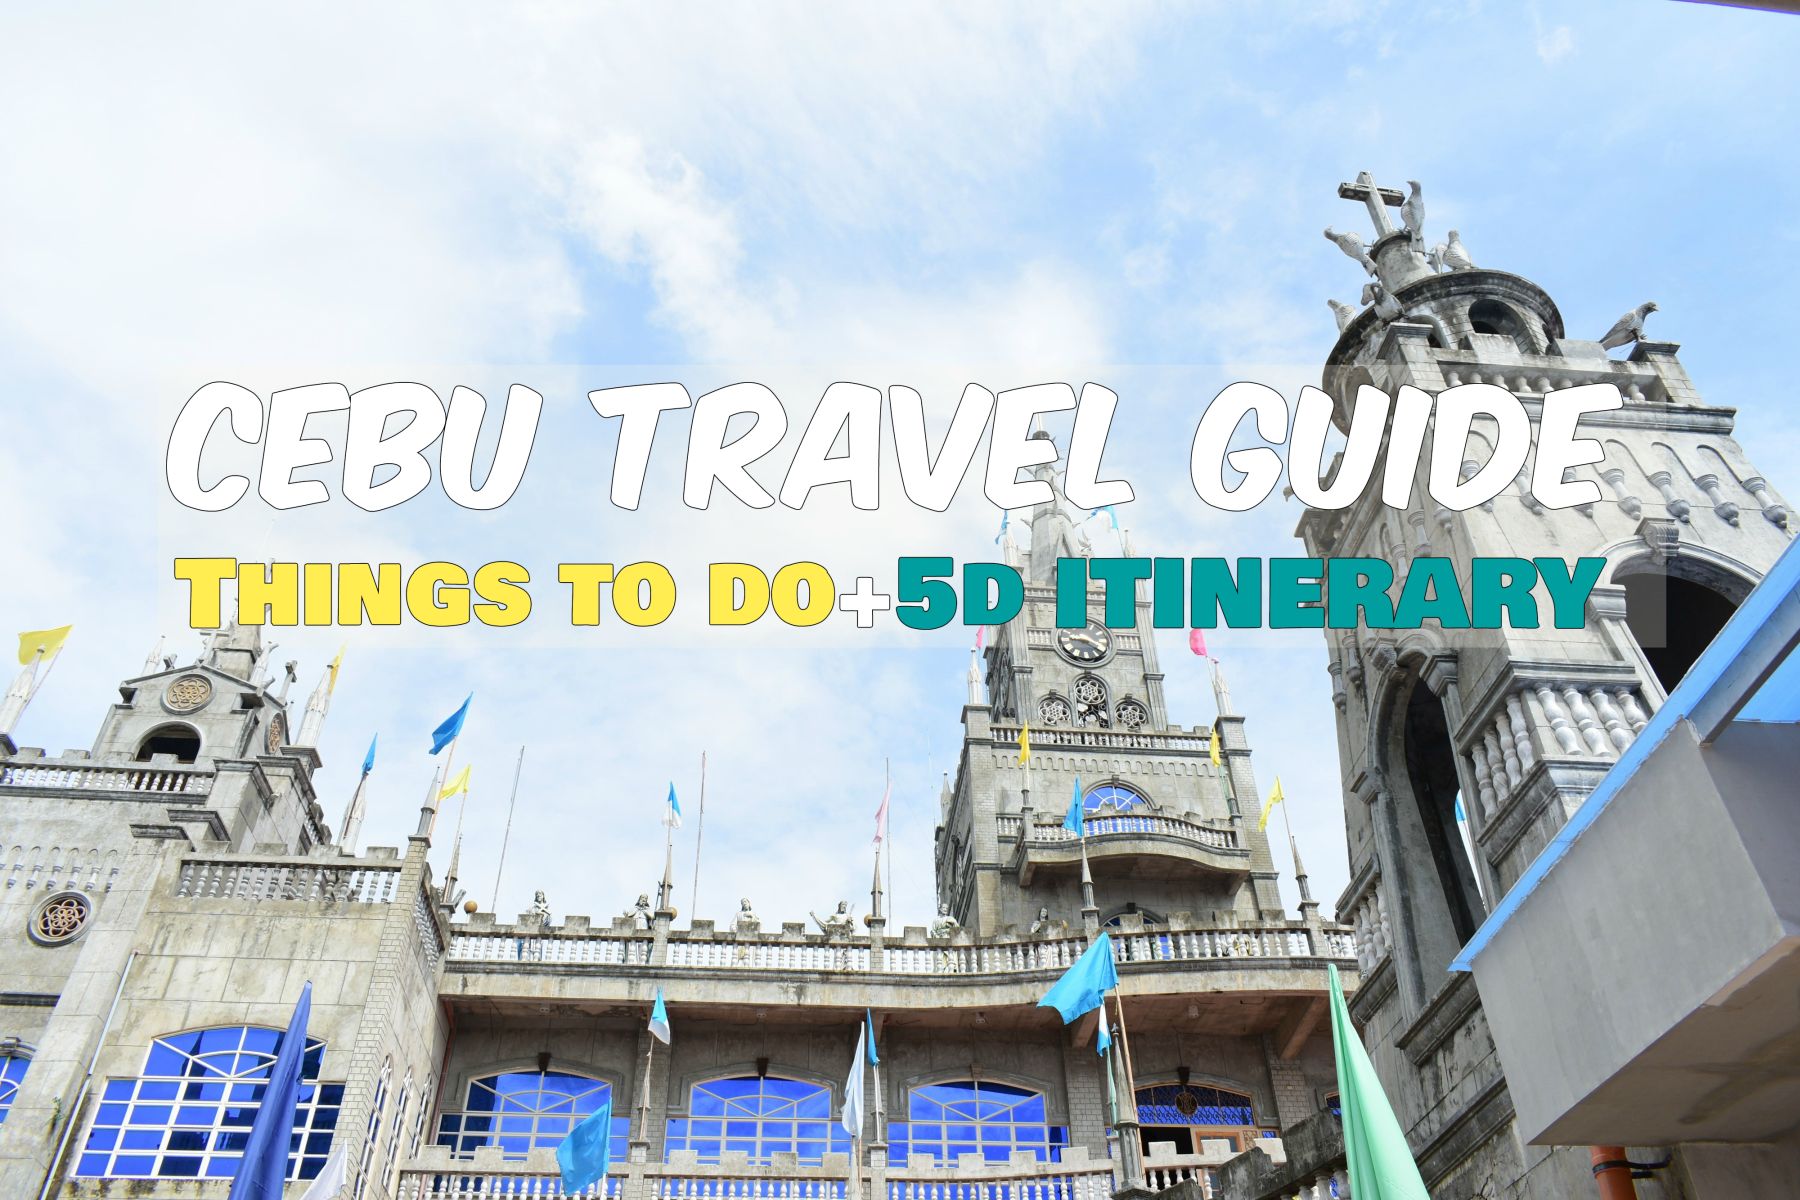 Metro Cebu and South Cebu Travel Guide